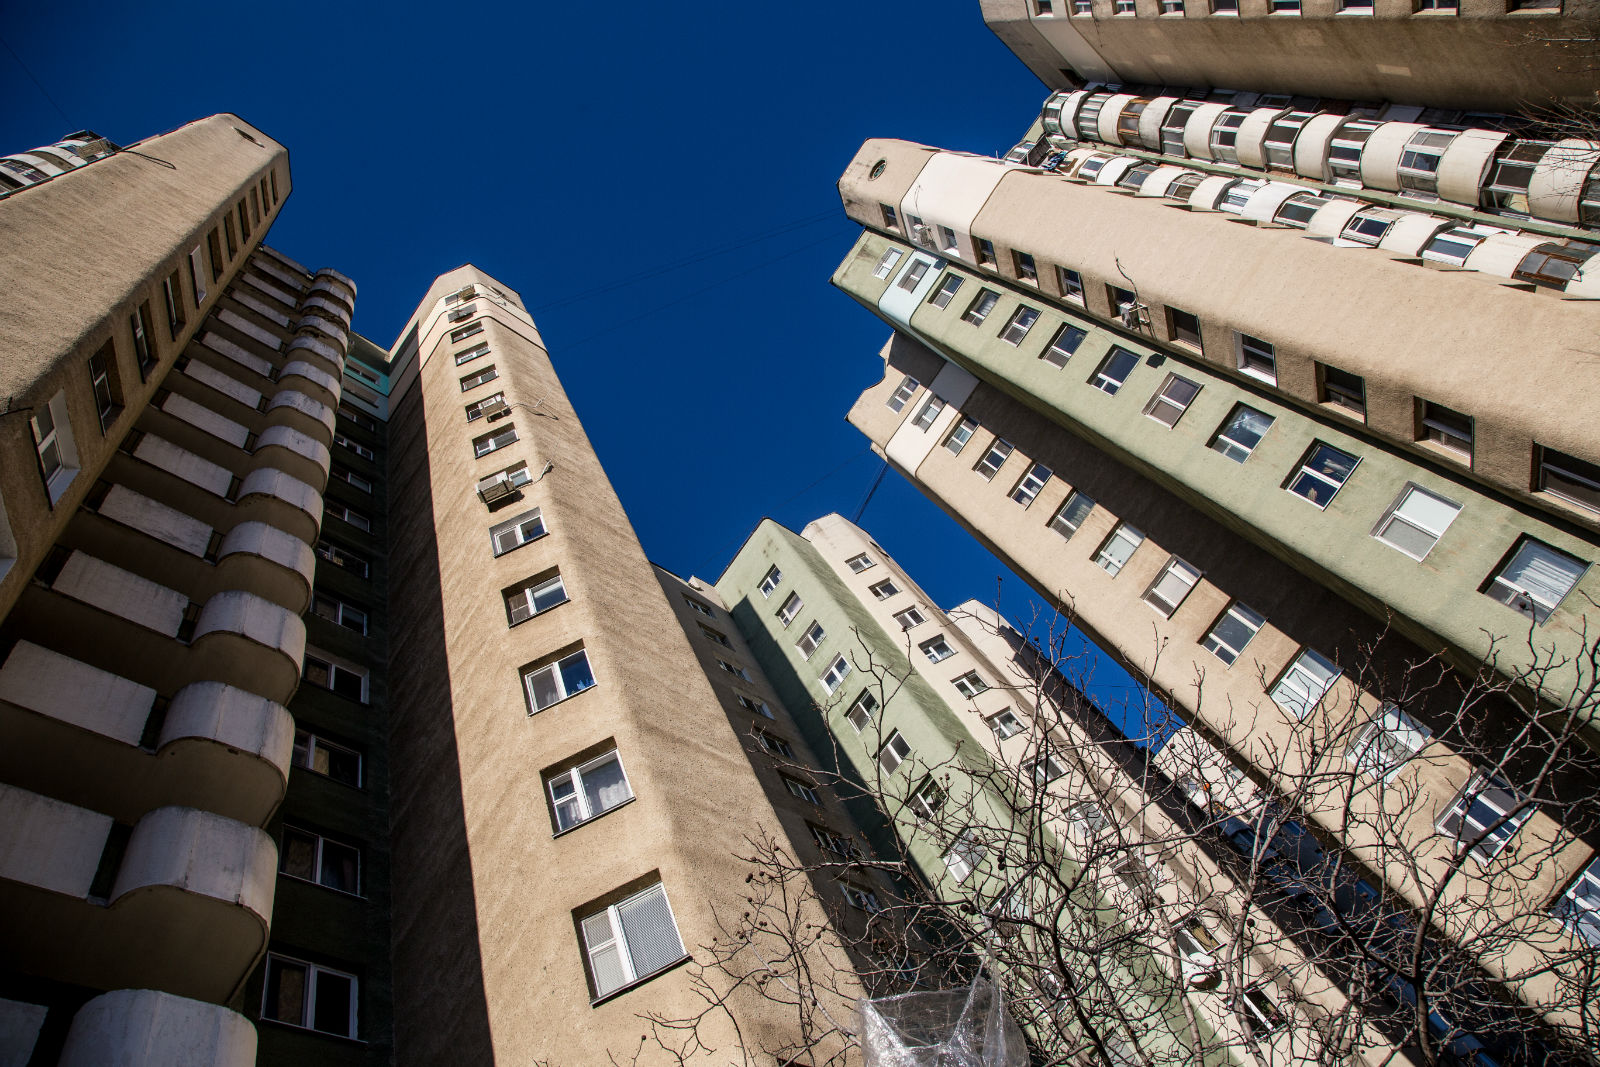 Apartment buildings in Chișinău